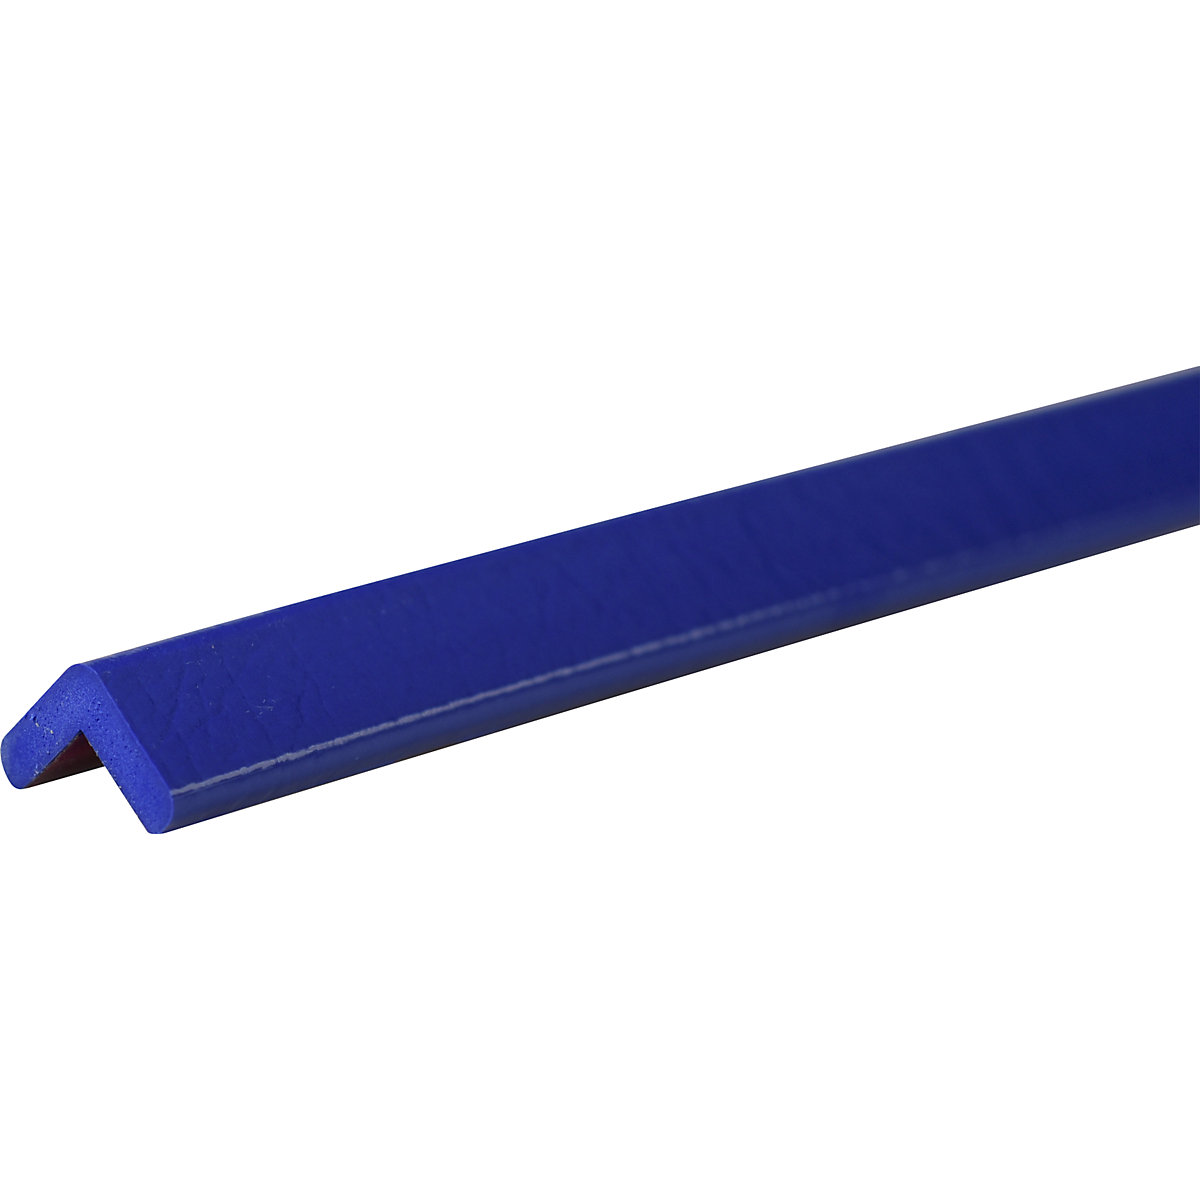 Knuffi®-hoekbescherming – SHG, type E, stuk van 1 m, blauw-11